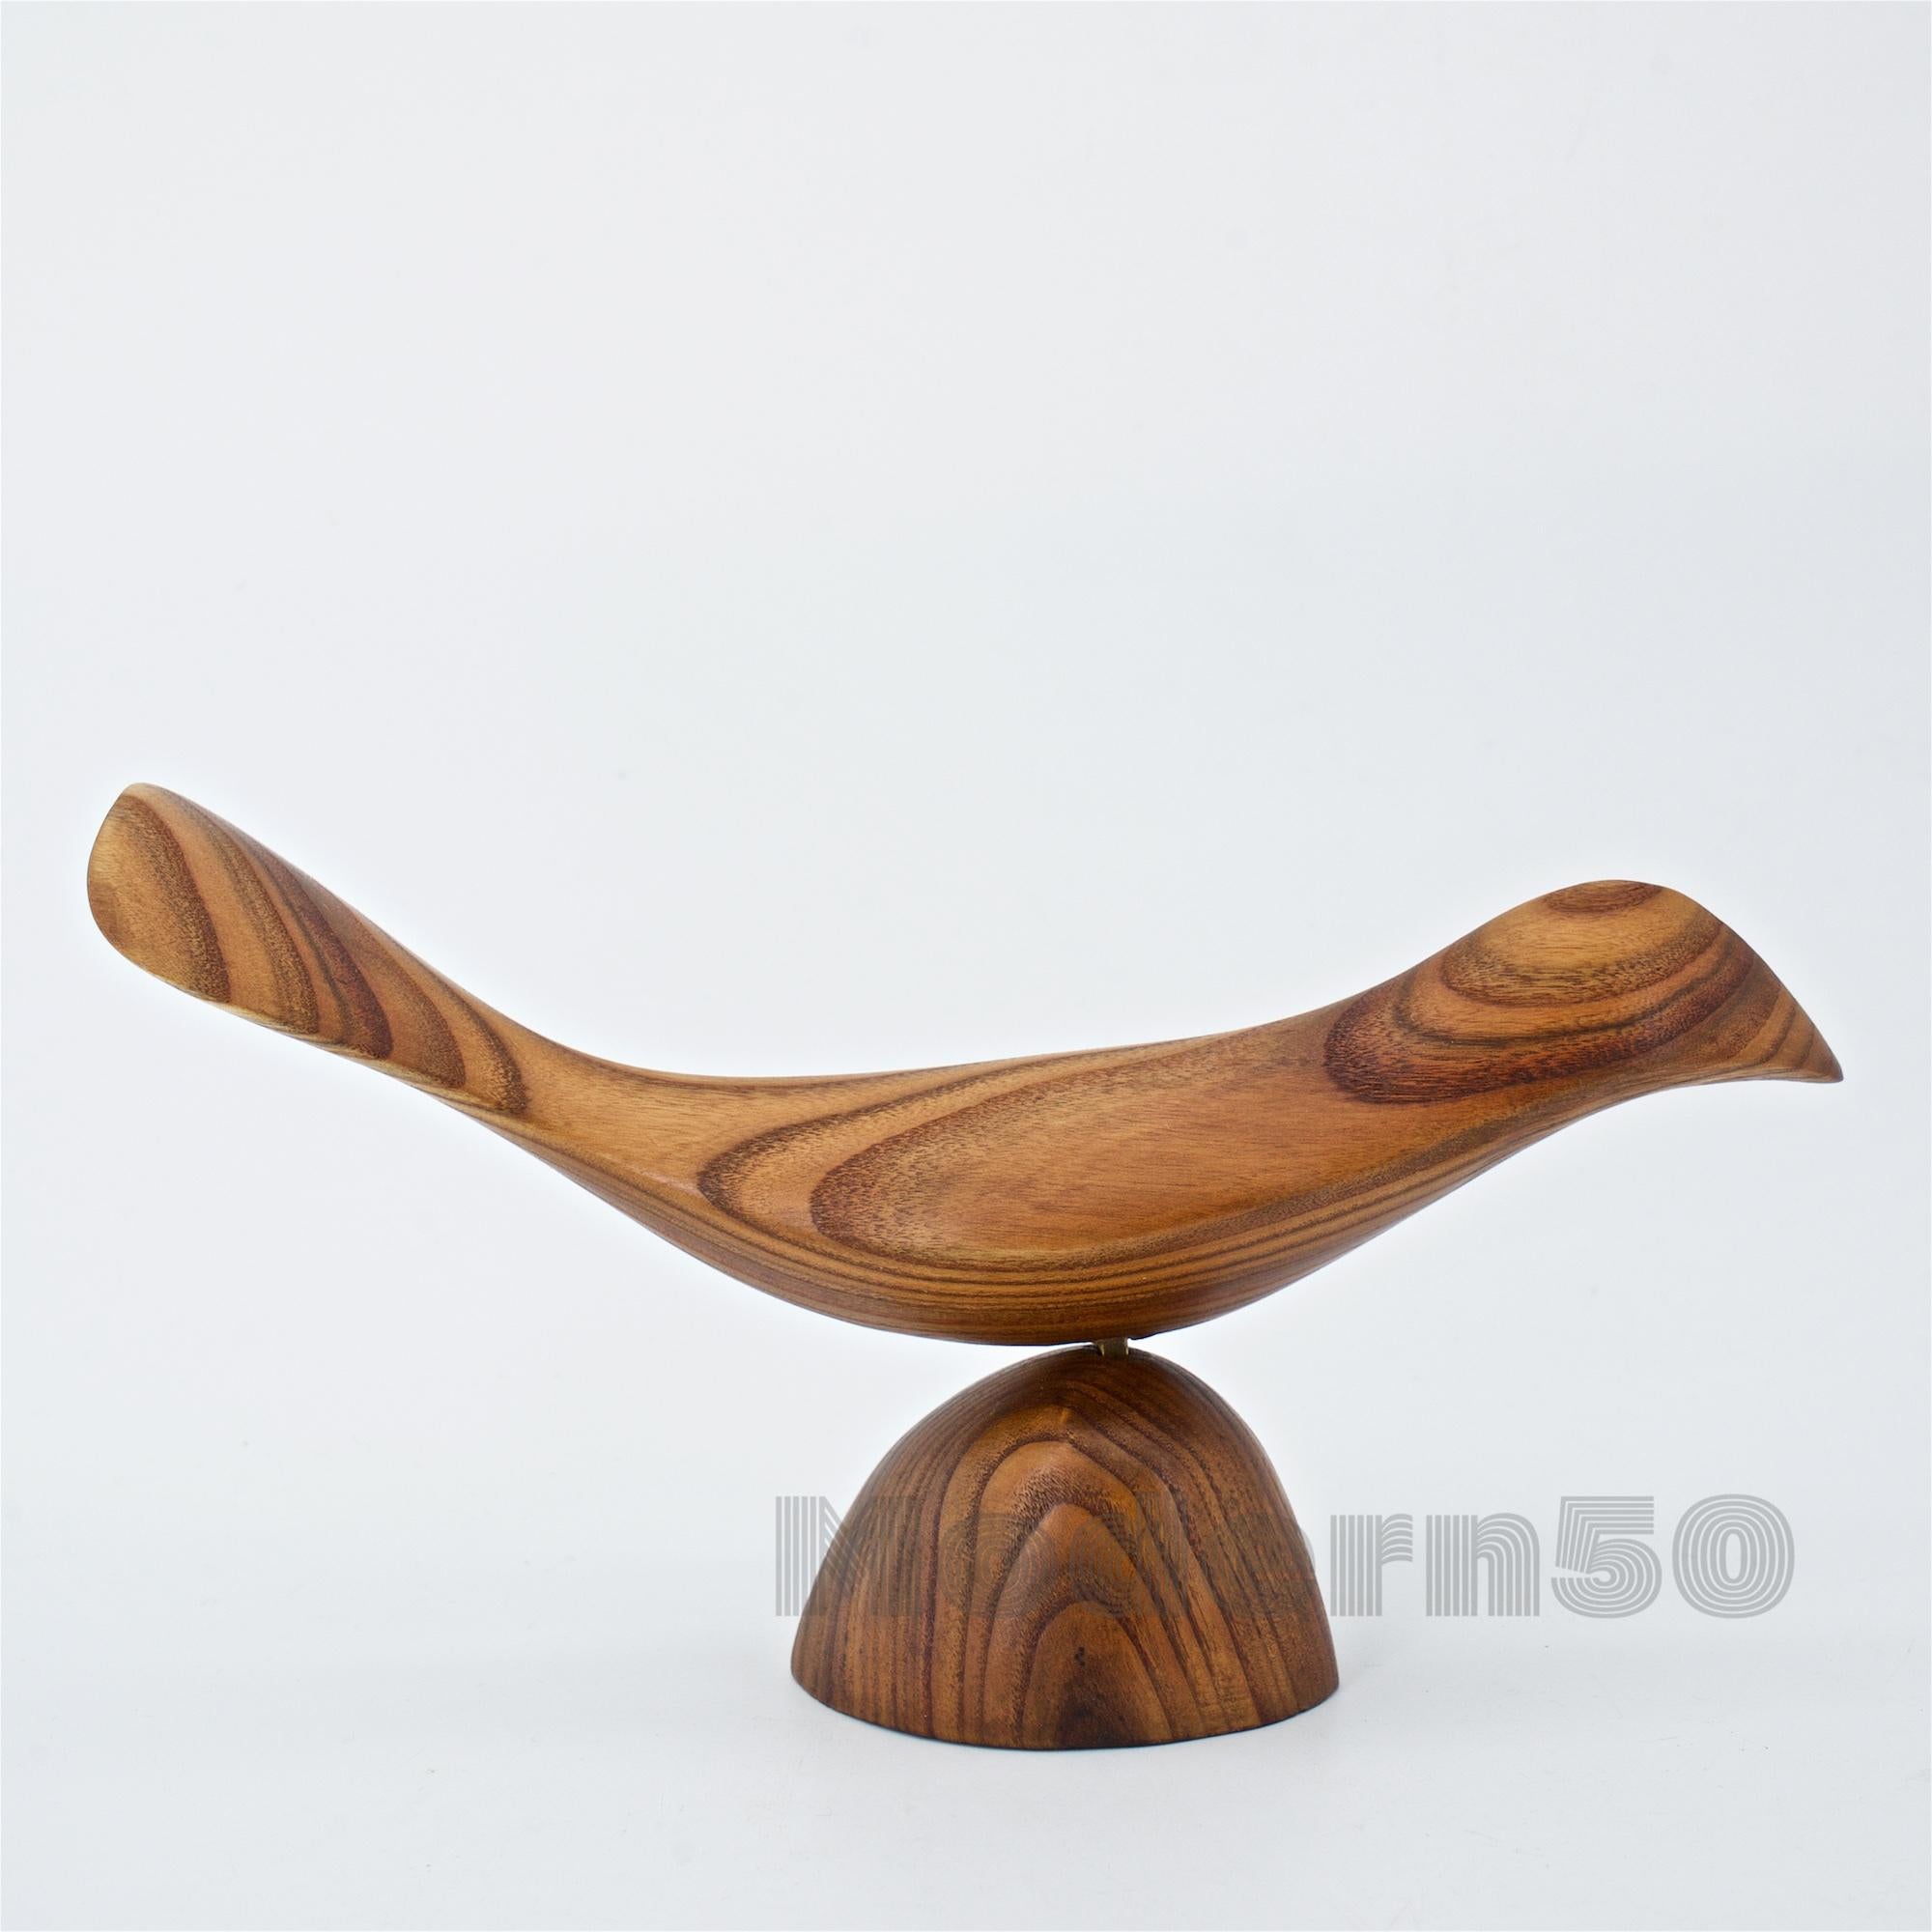 sumac wood carving